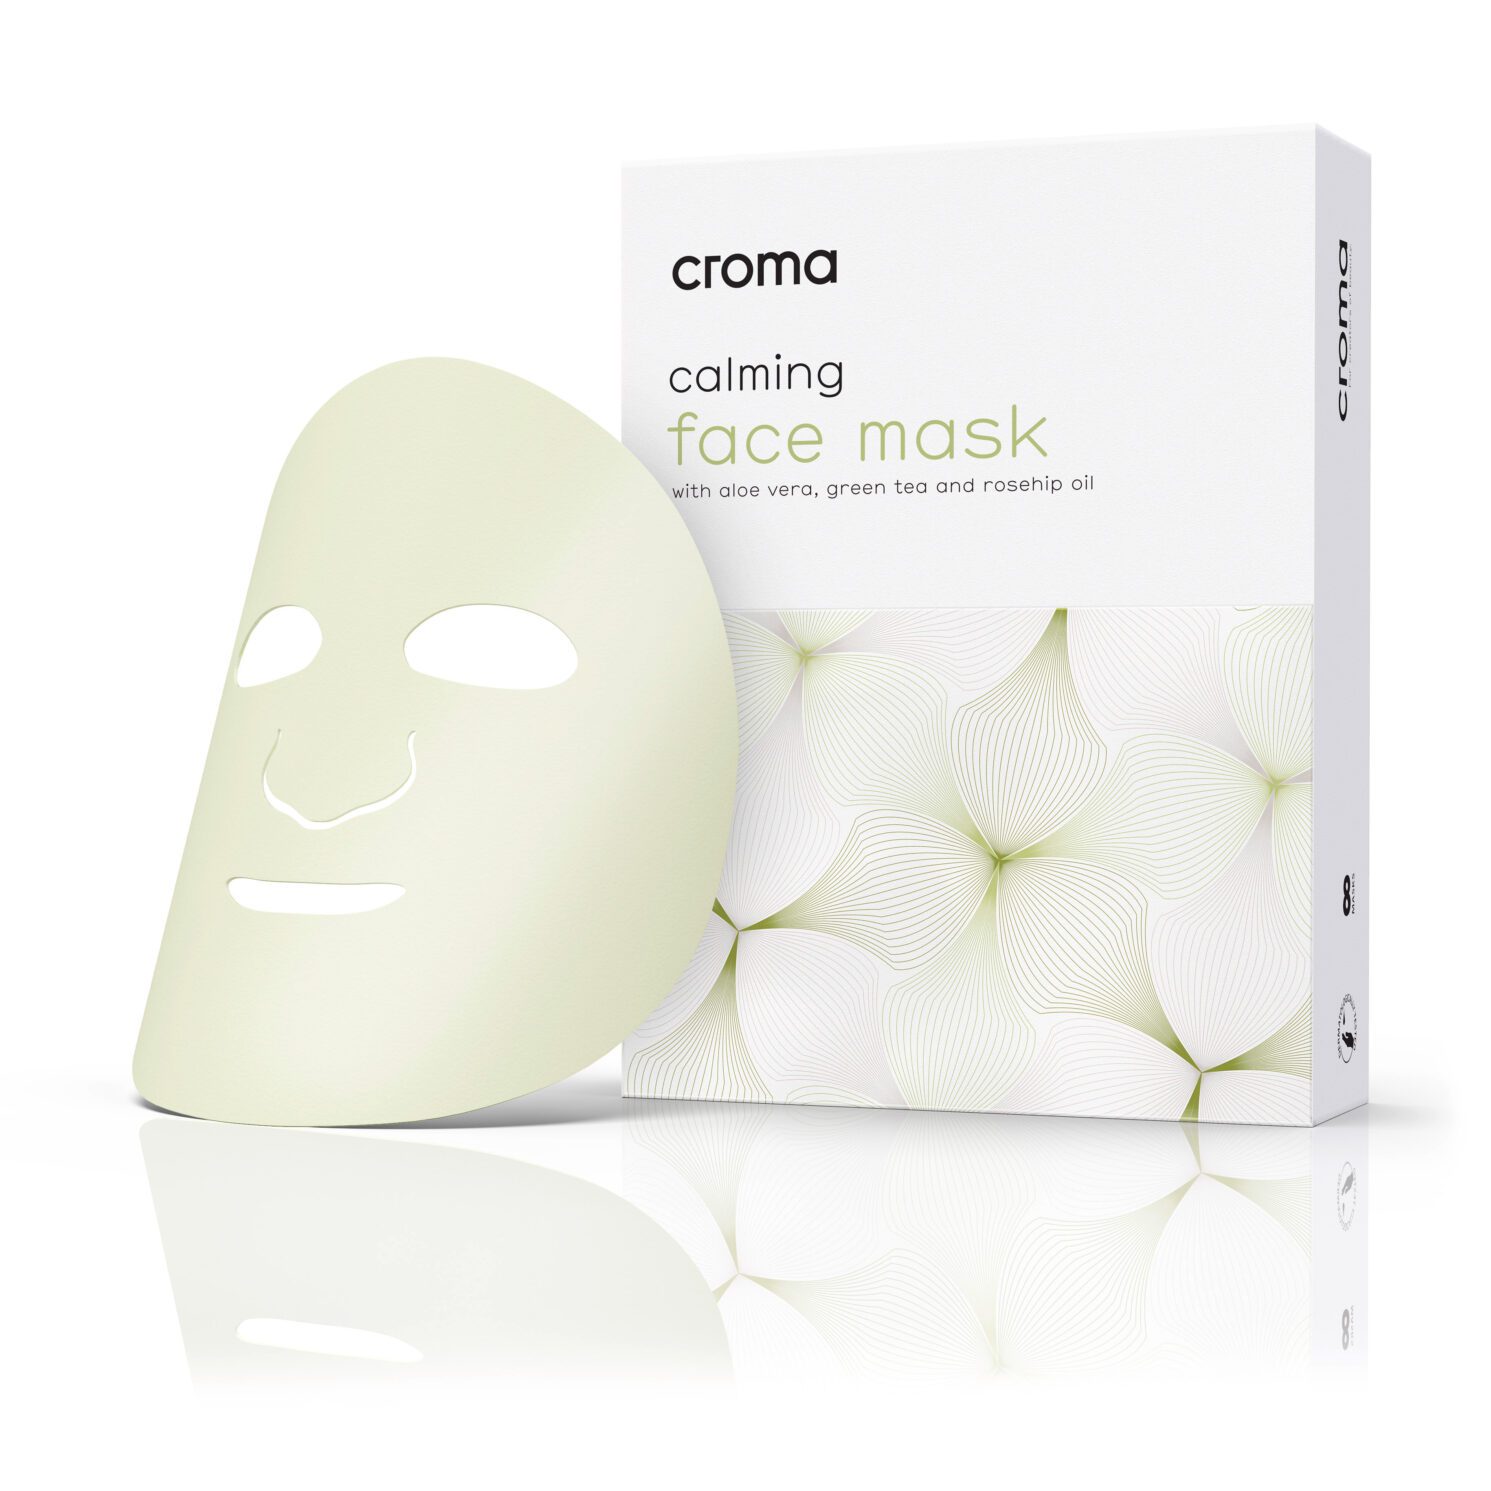 Croma calming face mask sRGB